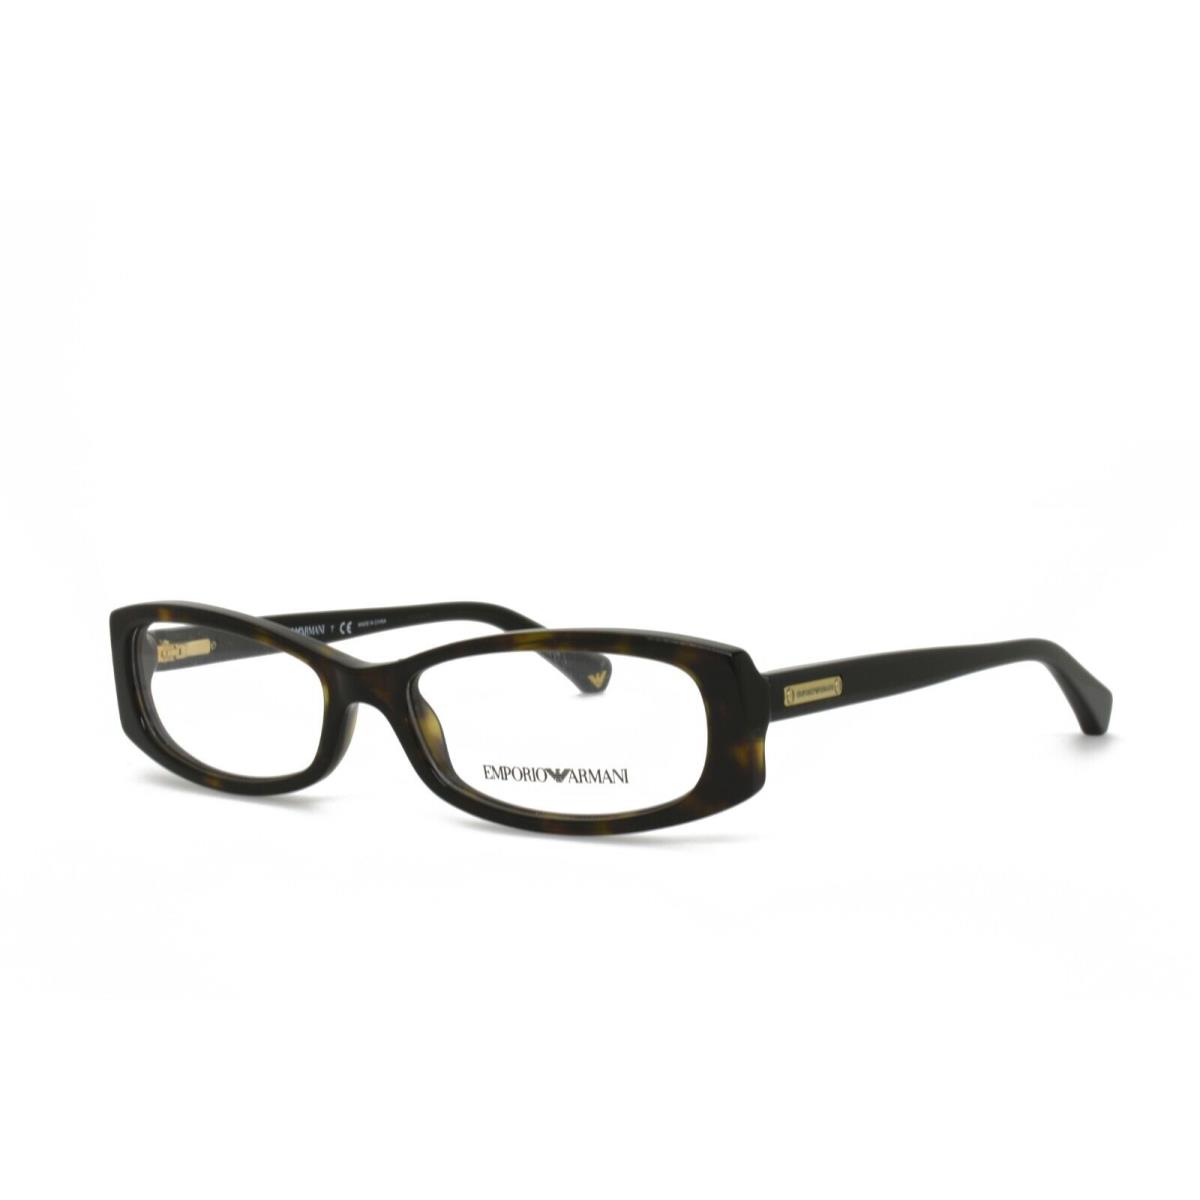 Emporio Armani 3007 5026 53-16-140 Tortoise Eyeglasses Frames